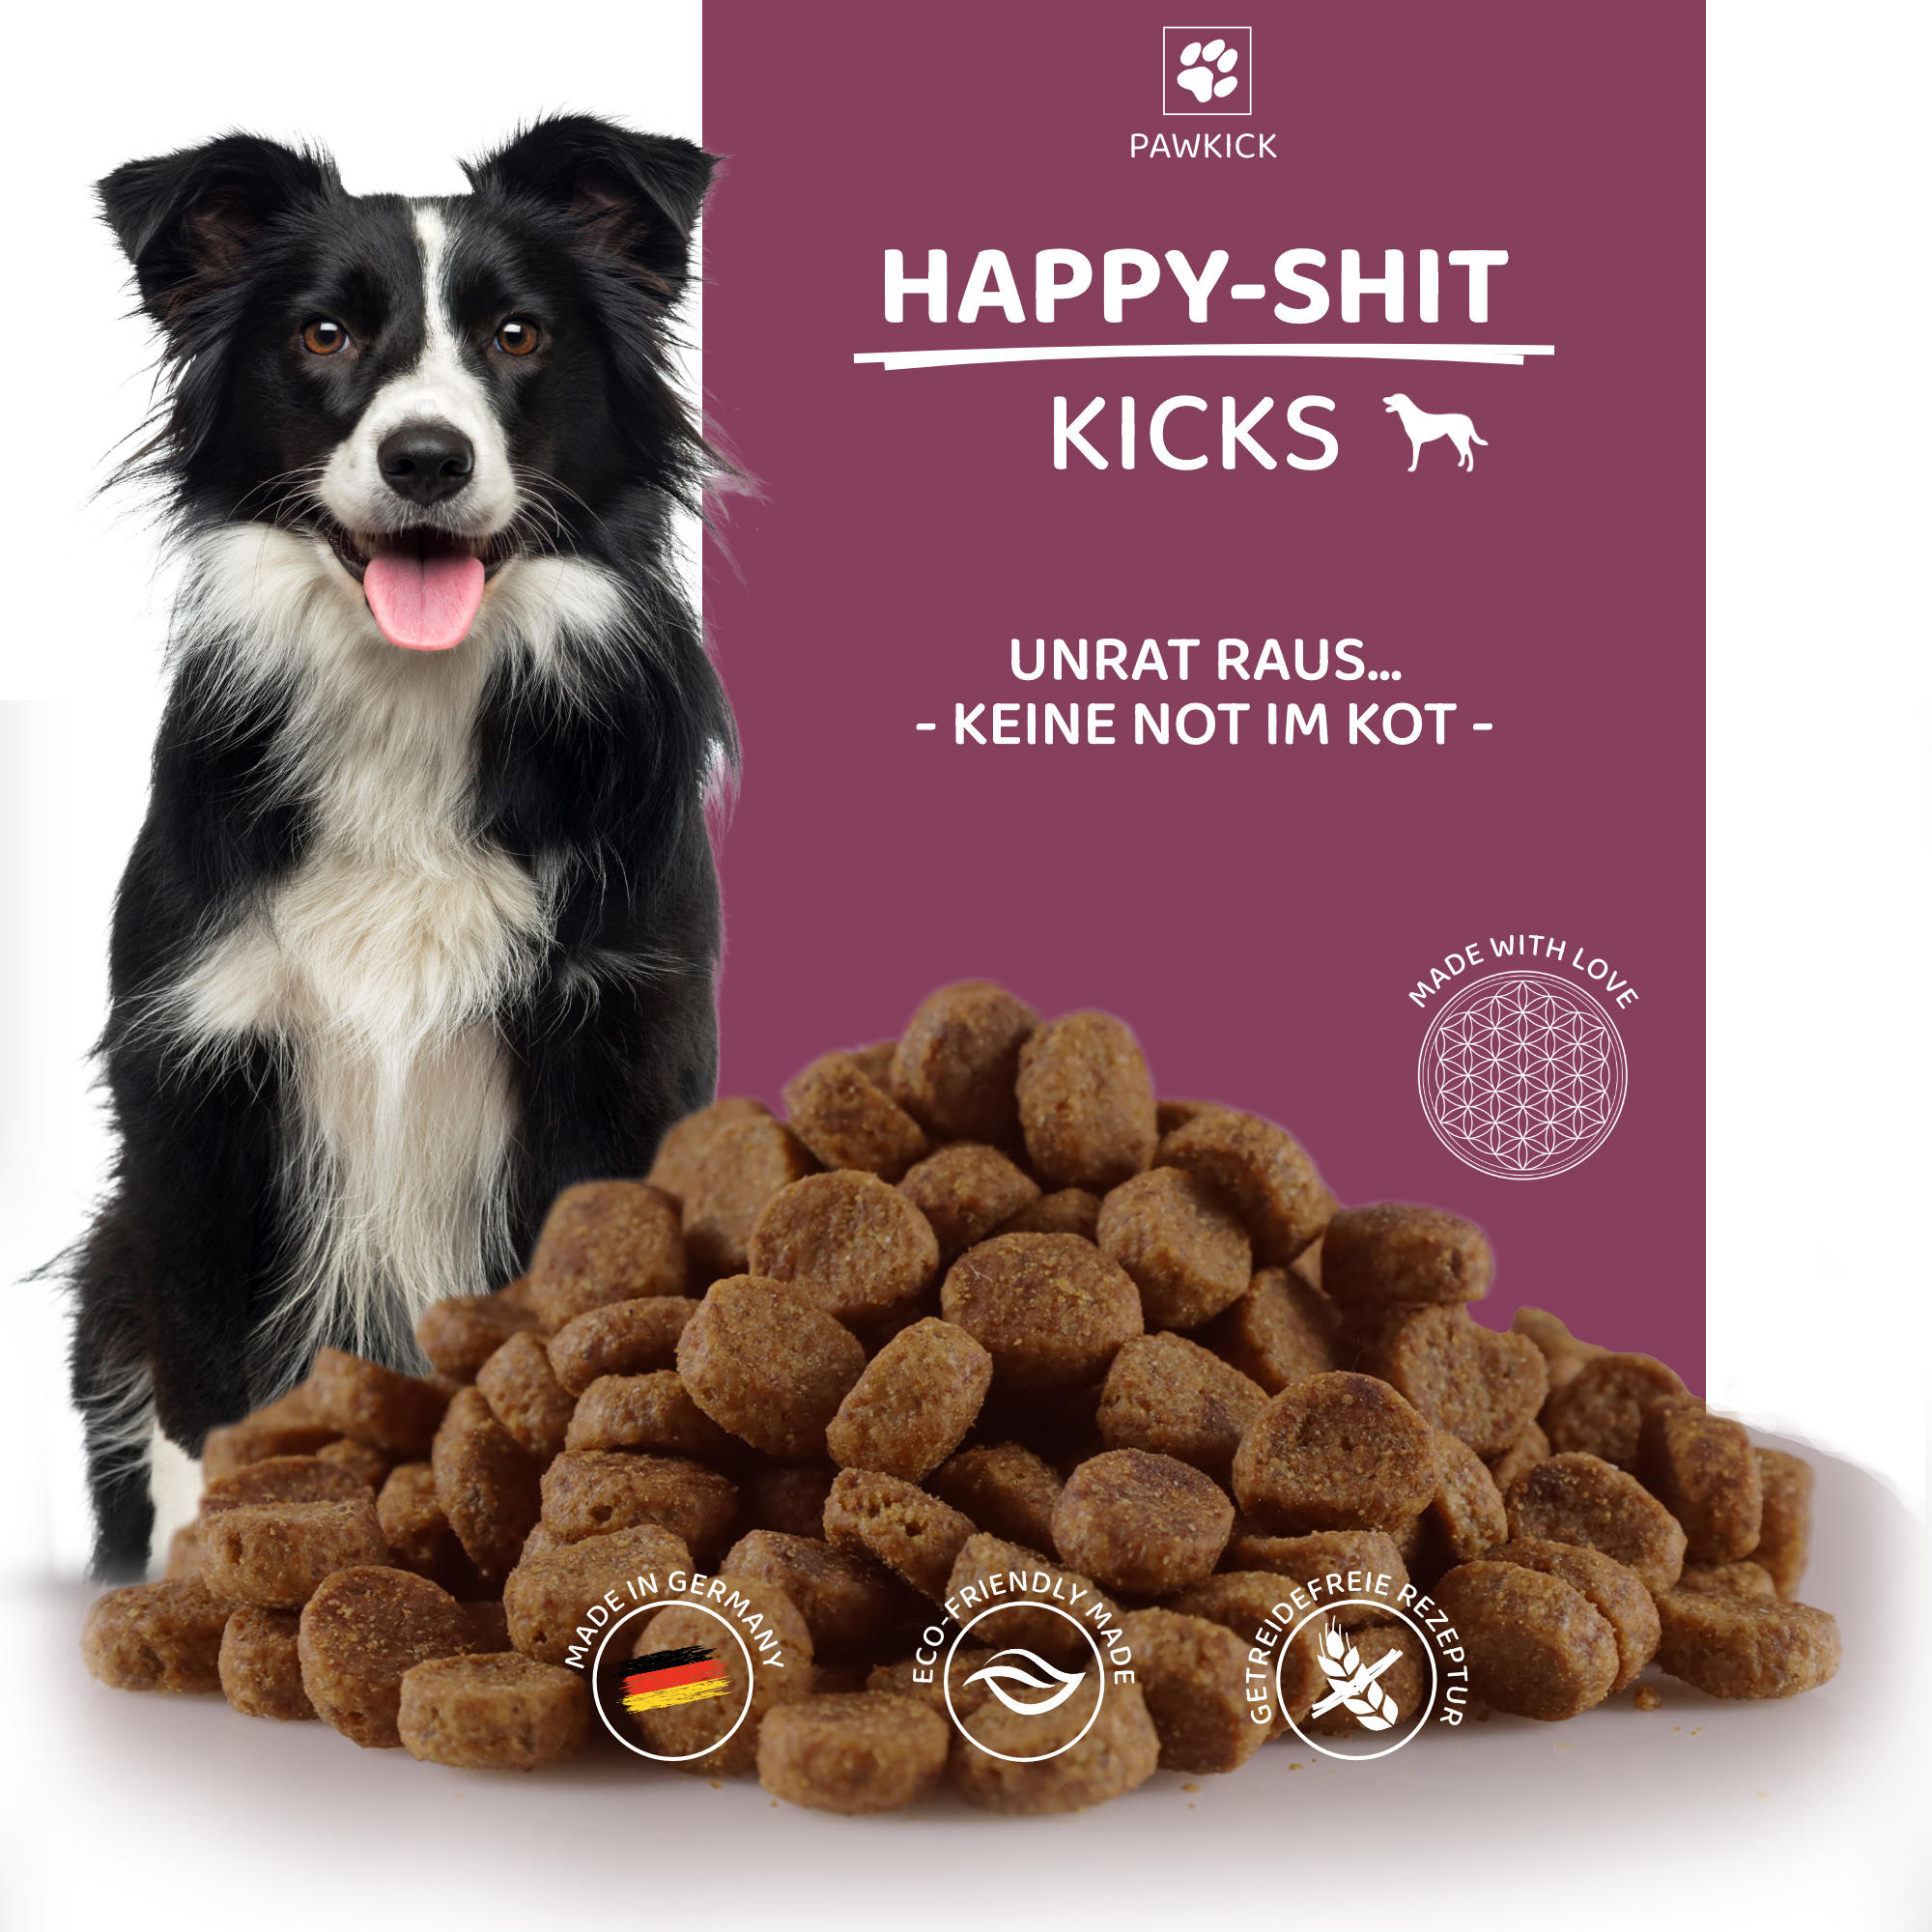 HAPPY-SHIT KICKS DOG